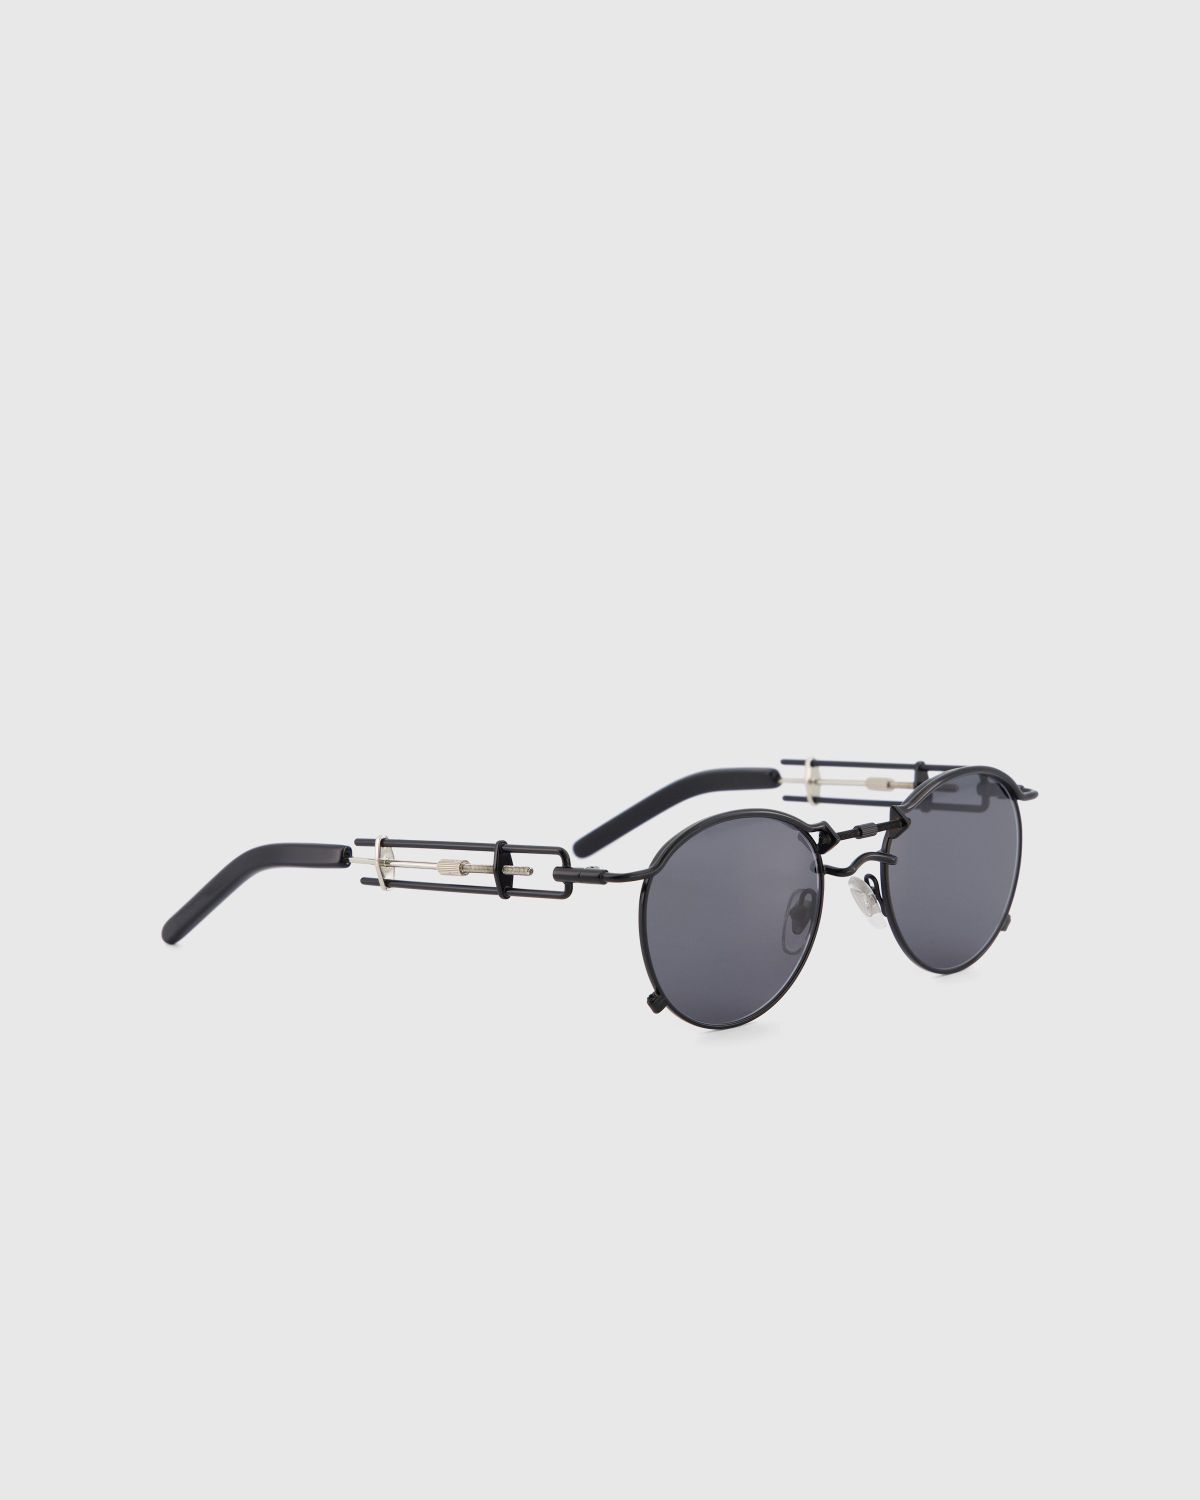 Jean Paul Gaultier x Burna Boy – 56-0174 Pas De Vis Sunglasses Black - Eyewear - Black - Image 2